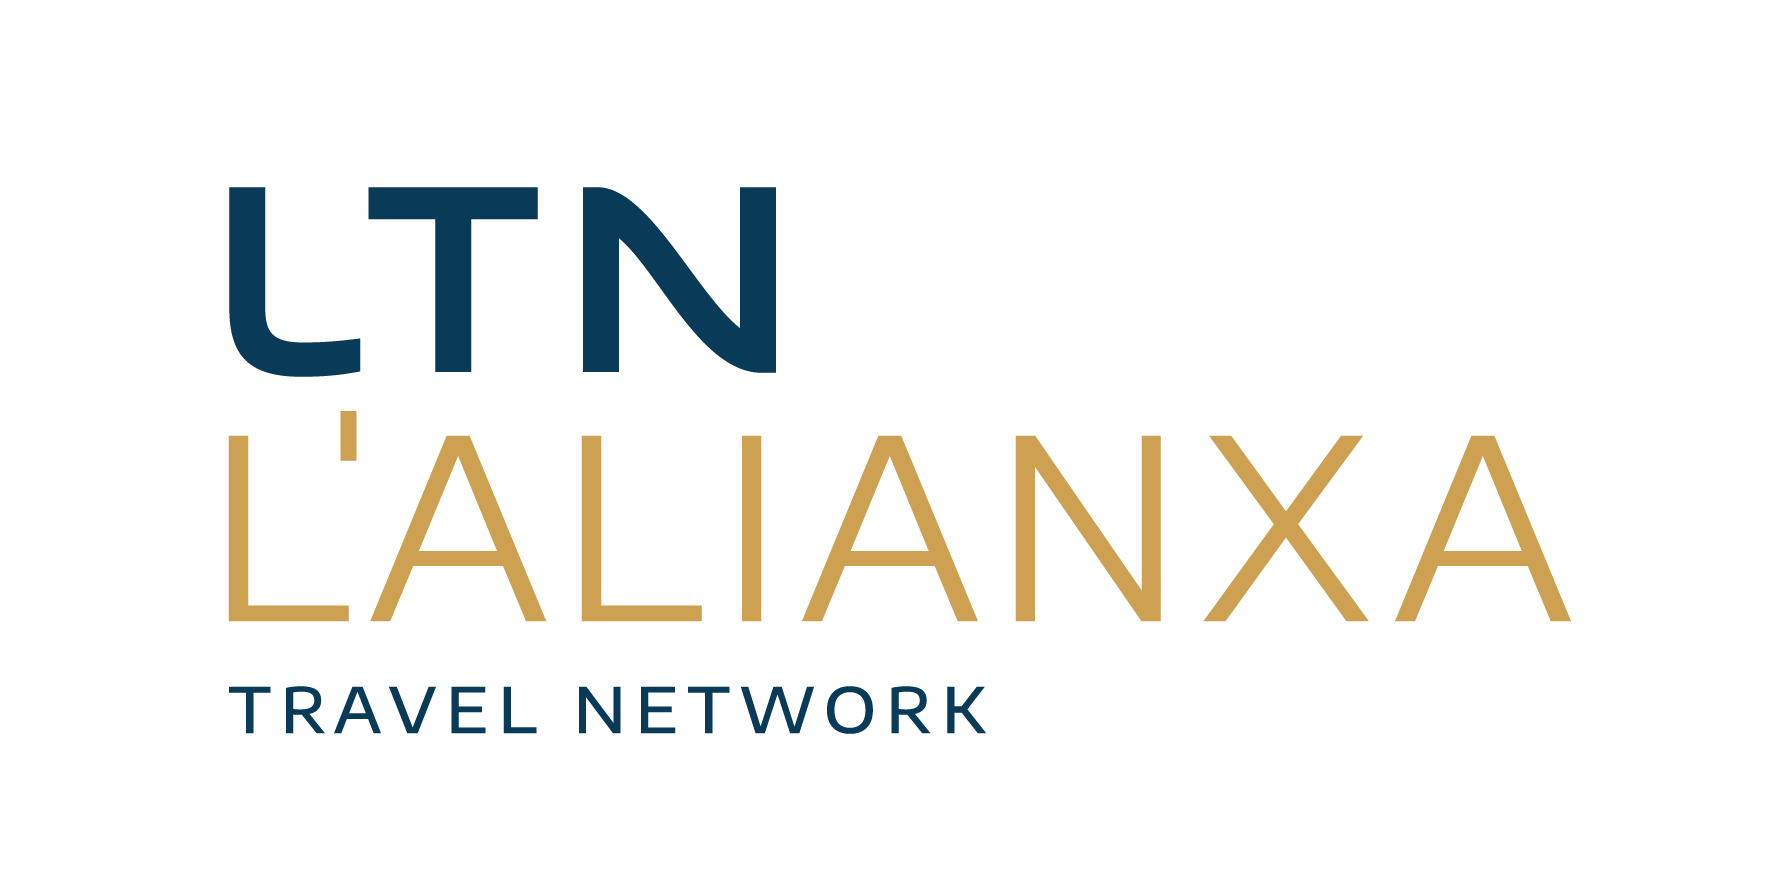 L'alianXa Travel Network